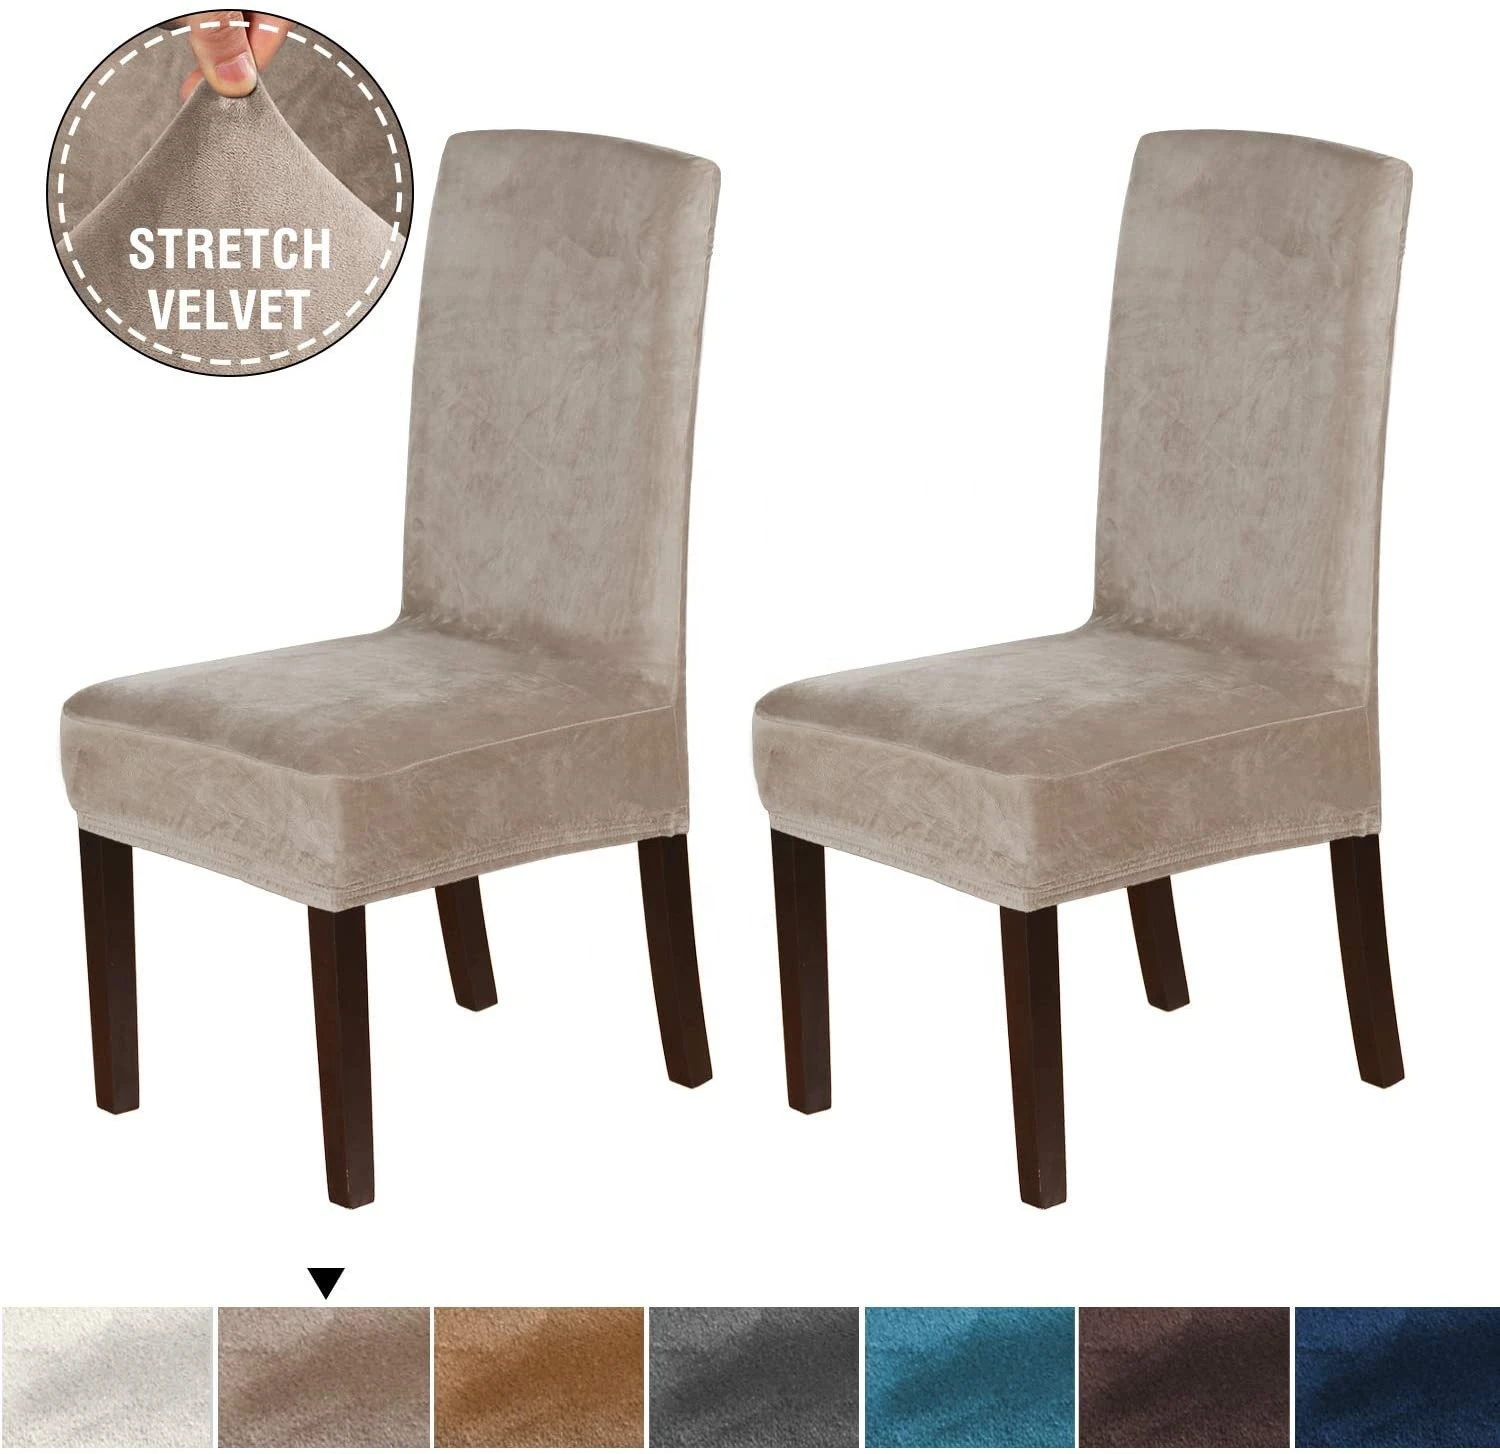 Velvet Stretch Chair Covers 2 Piece Luxury Velvet Chair Covers Dining High Spandex Chair Covers